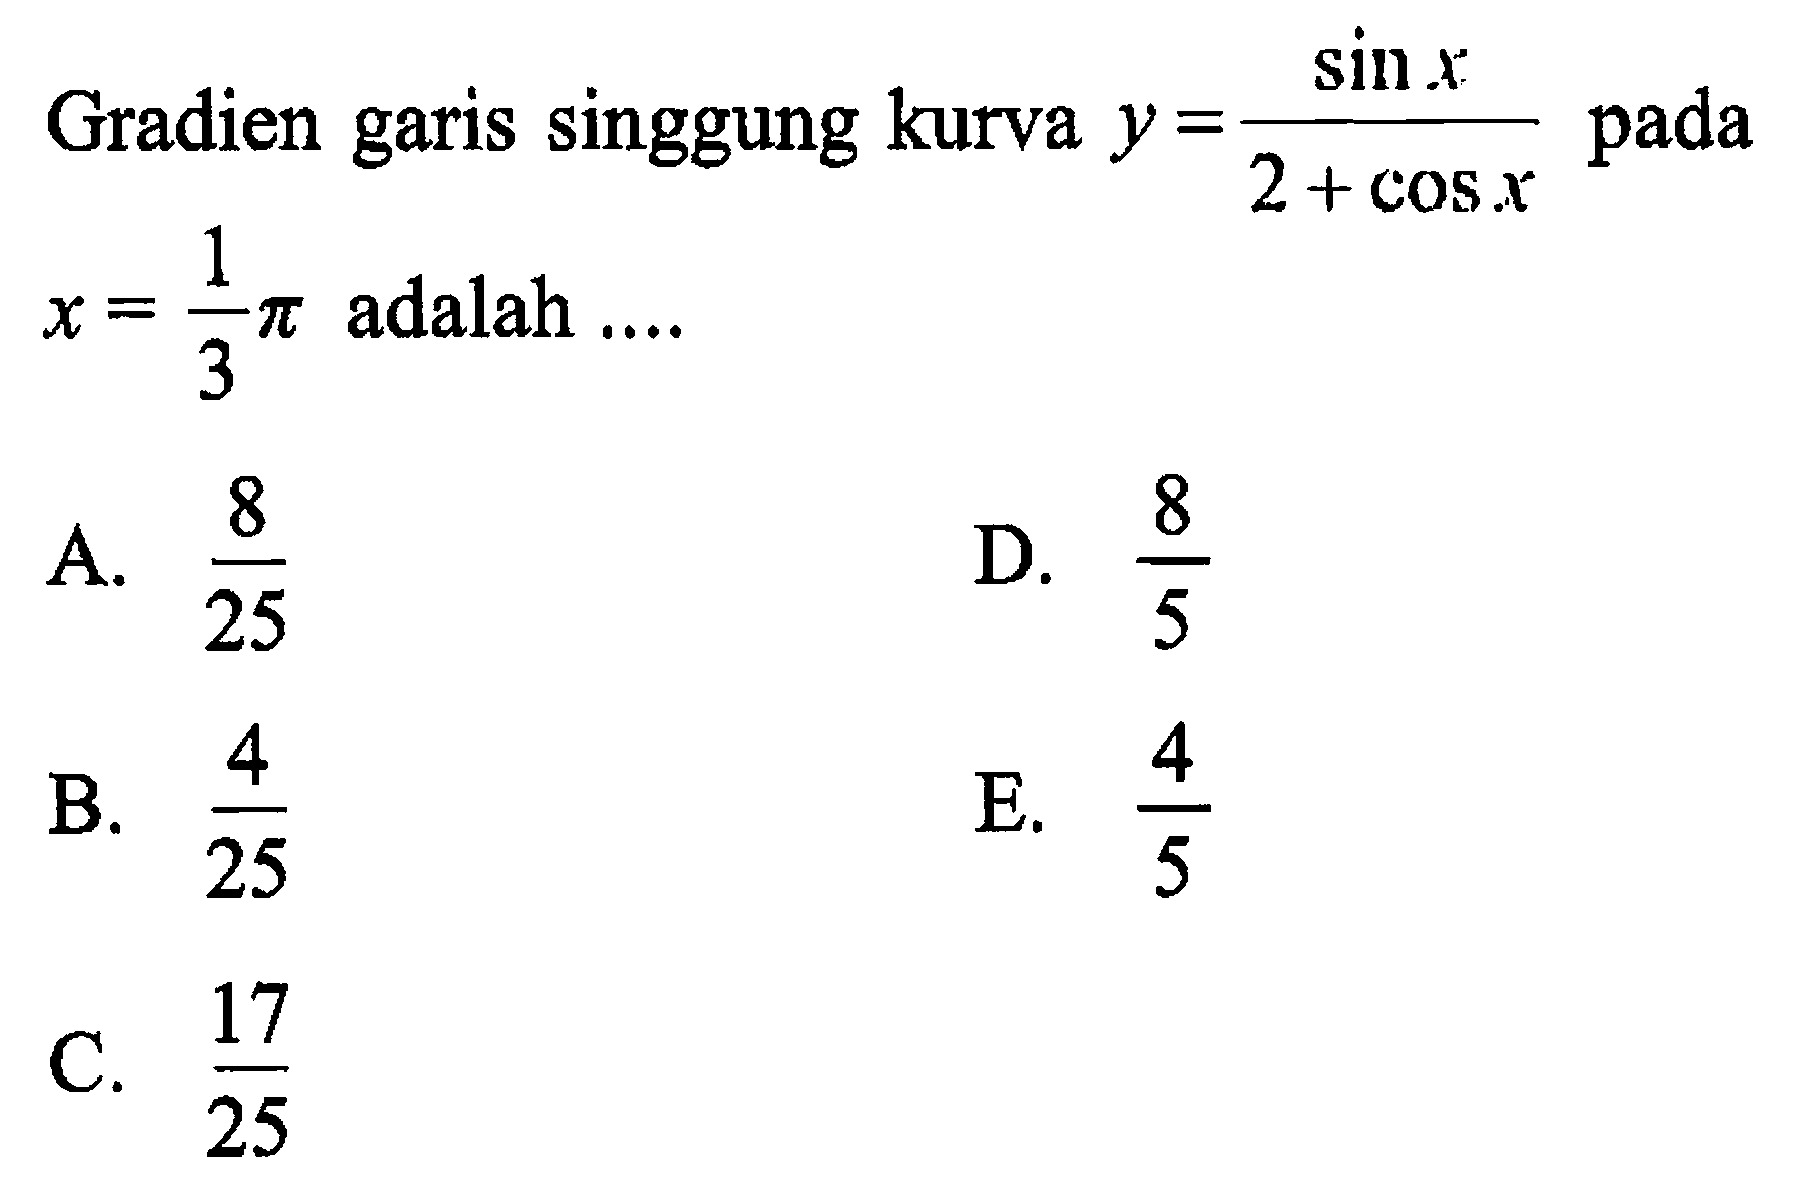 Gradien garis singgung kurva y = (sinx/(2+cos x)) pada x=1/3 pi adalah